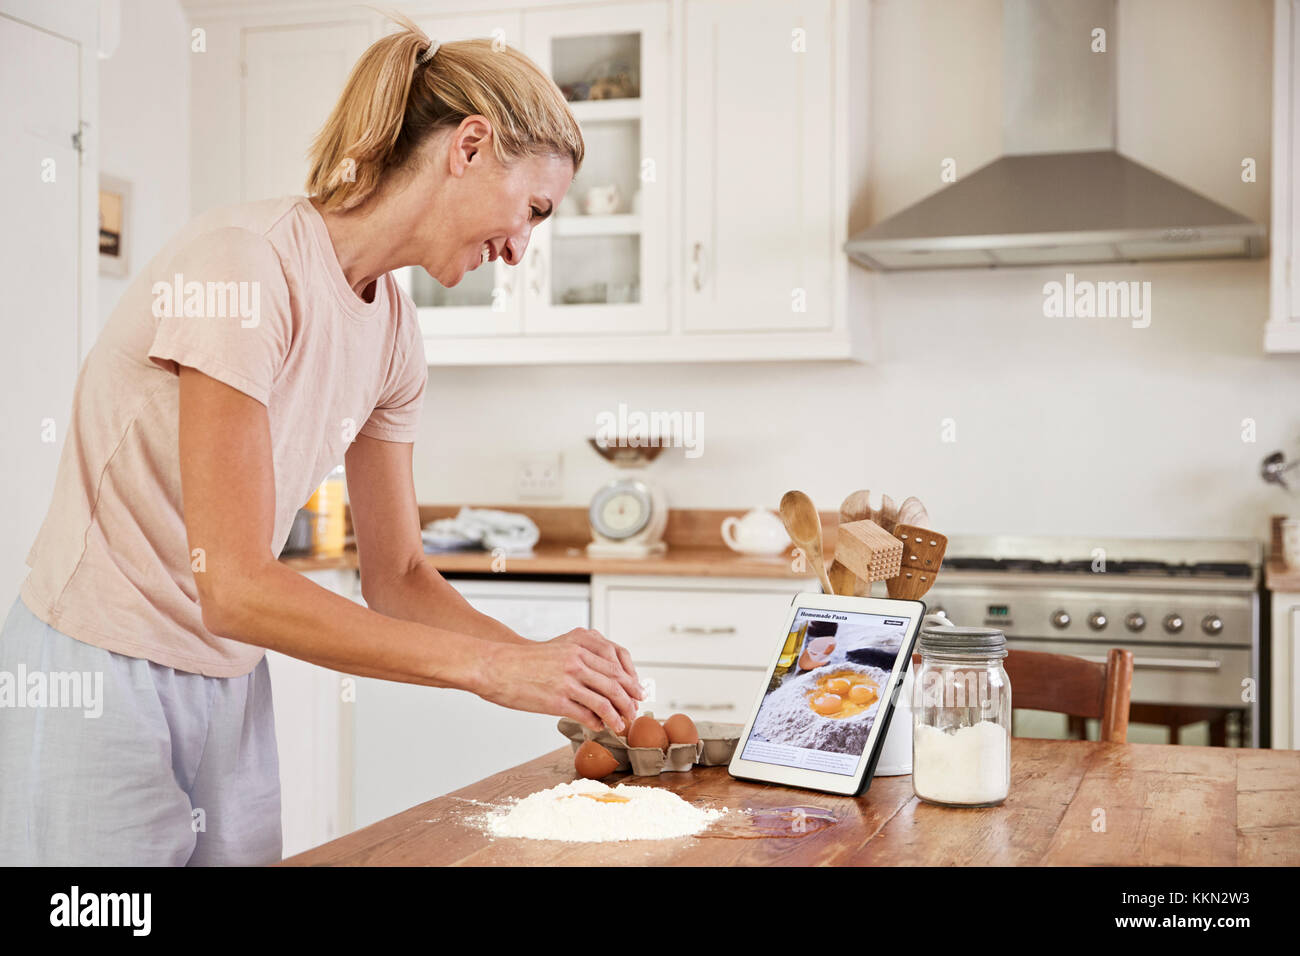 Woman Following Recipe On Digital Tablet In Kitchen Stock Photo